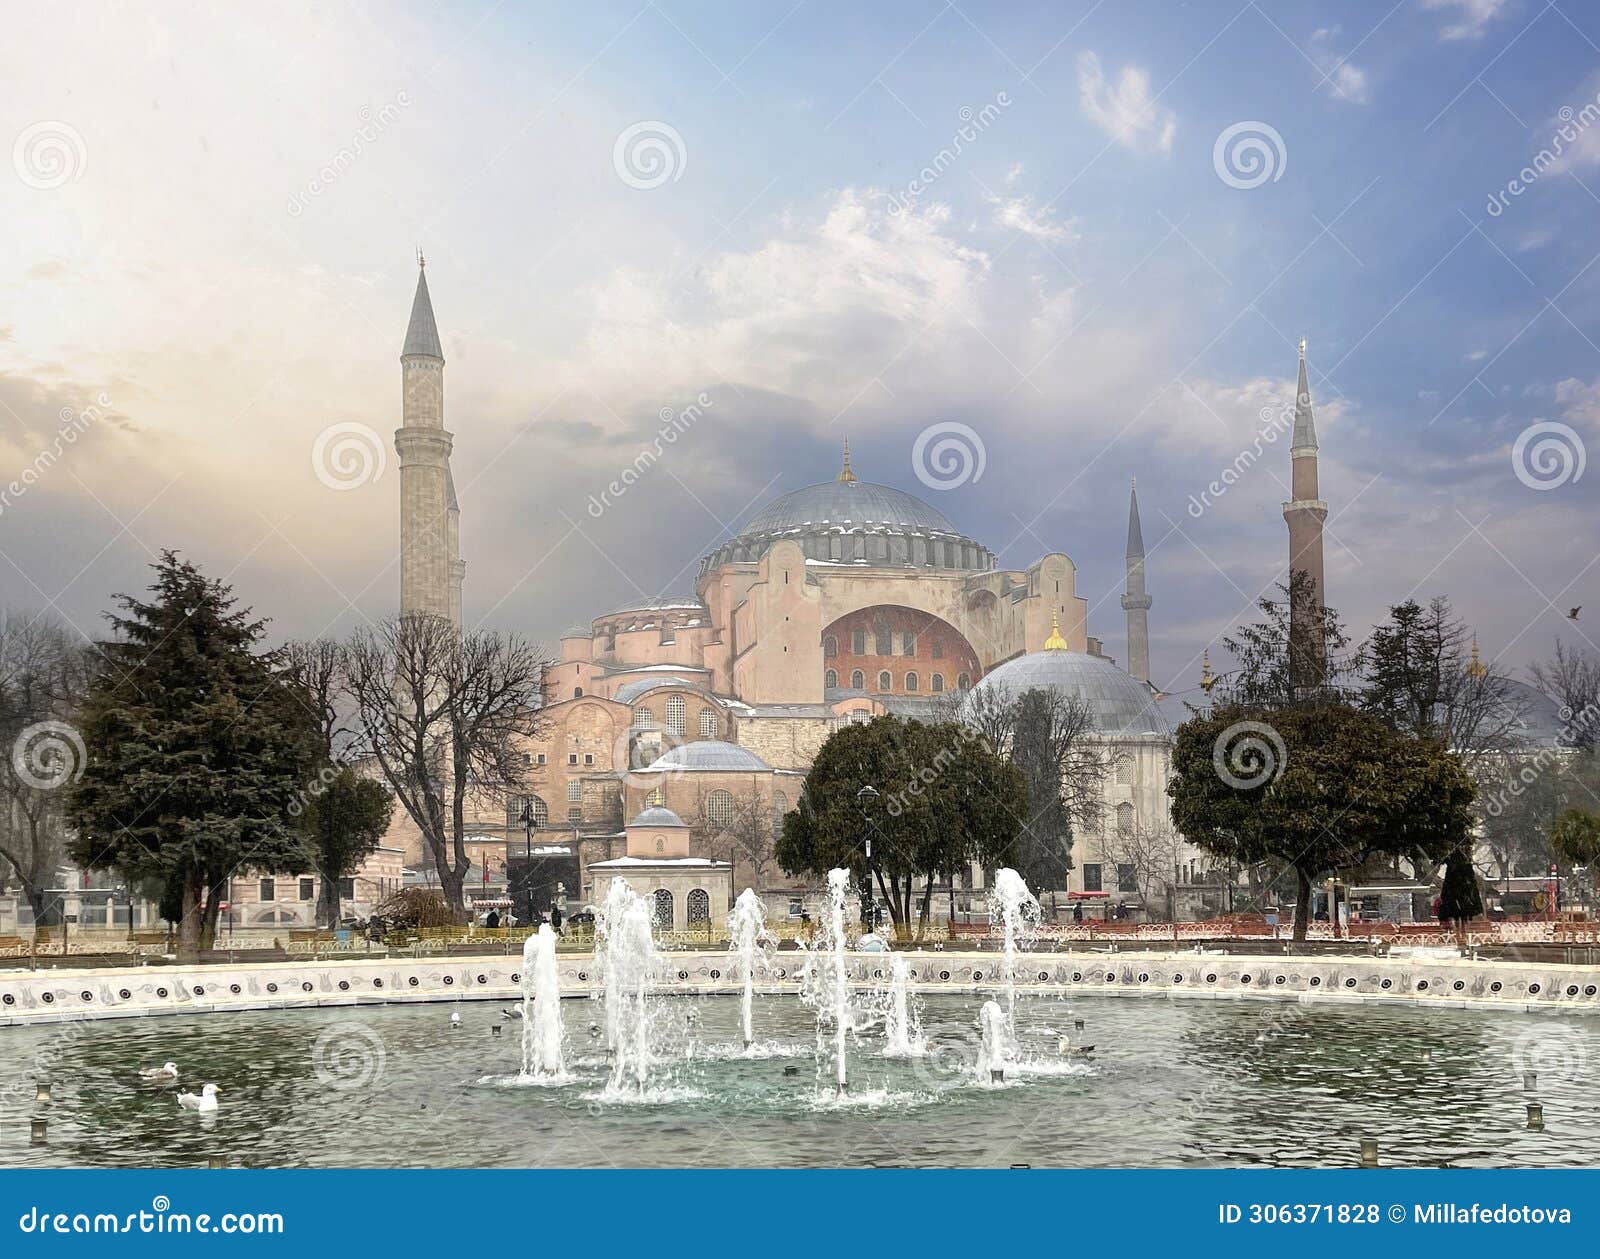 hagia sophia, istanbul landmark mosque and fontain